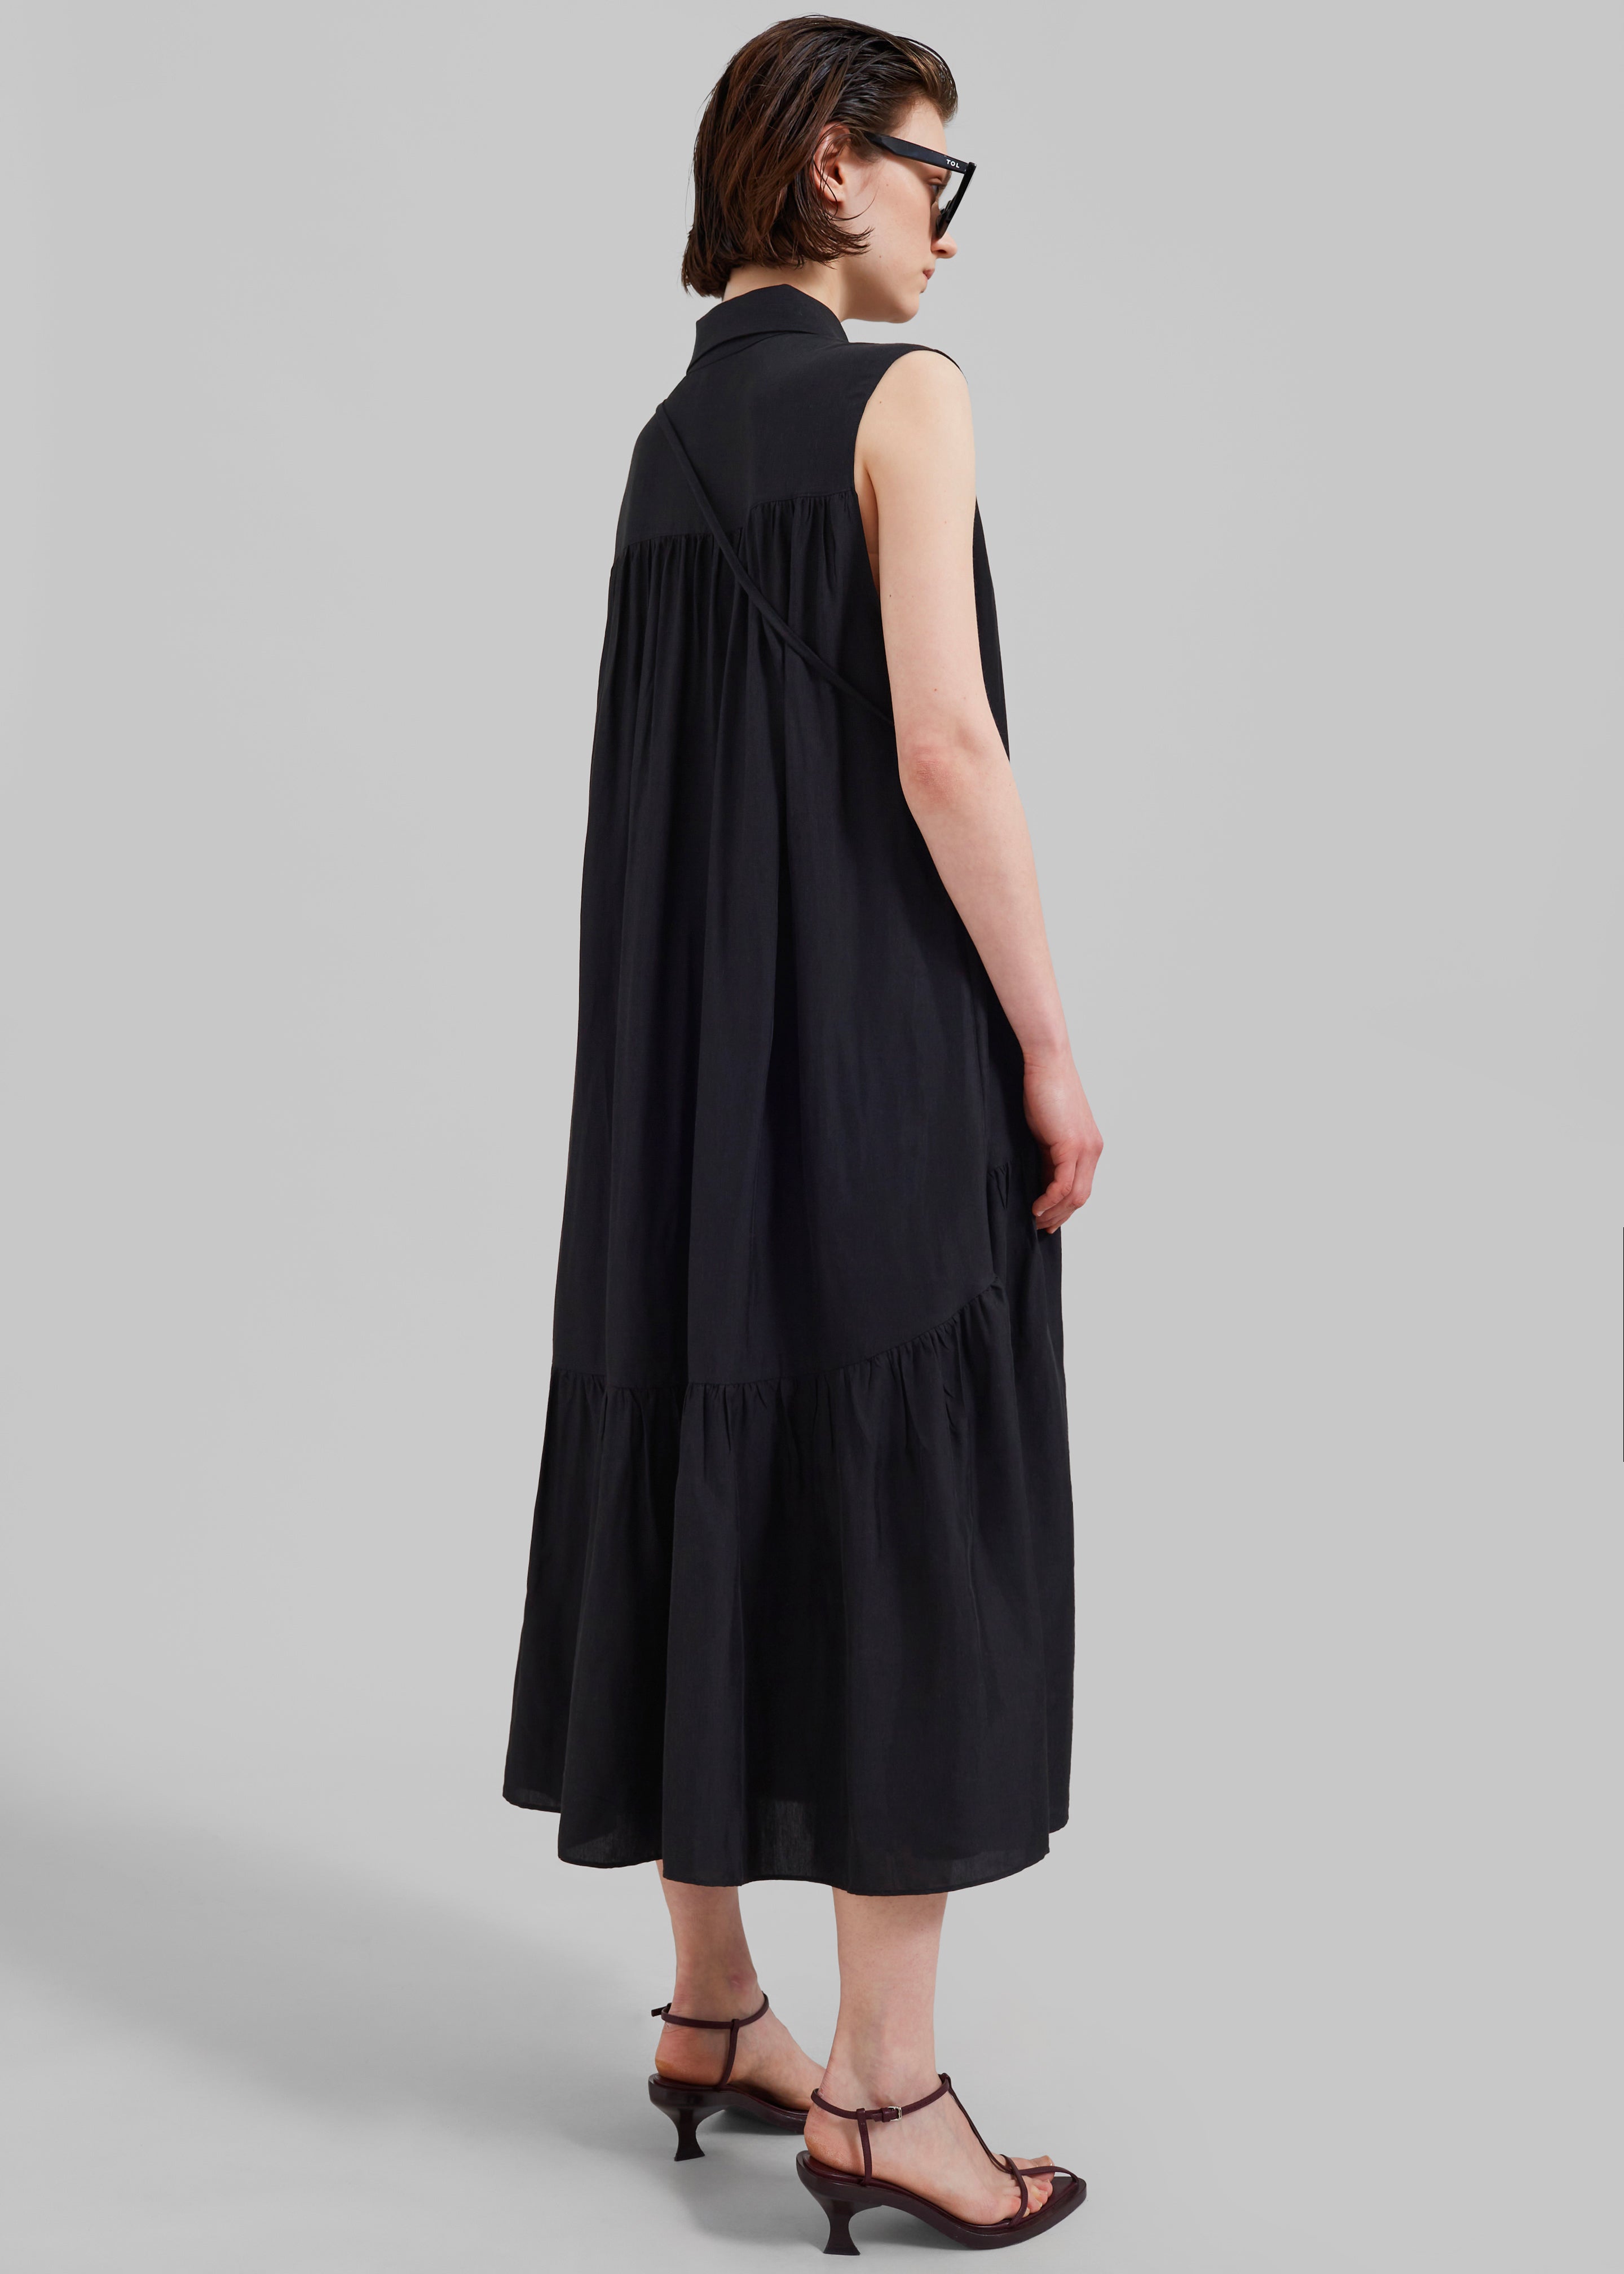 Maela Button Up Midi Dress - Black - 8